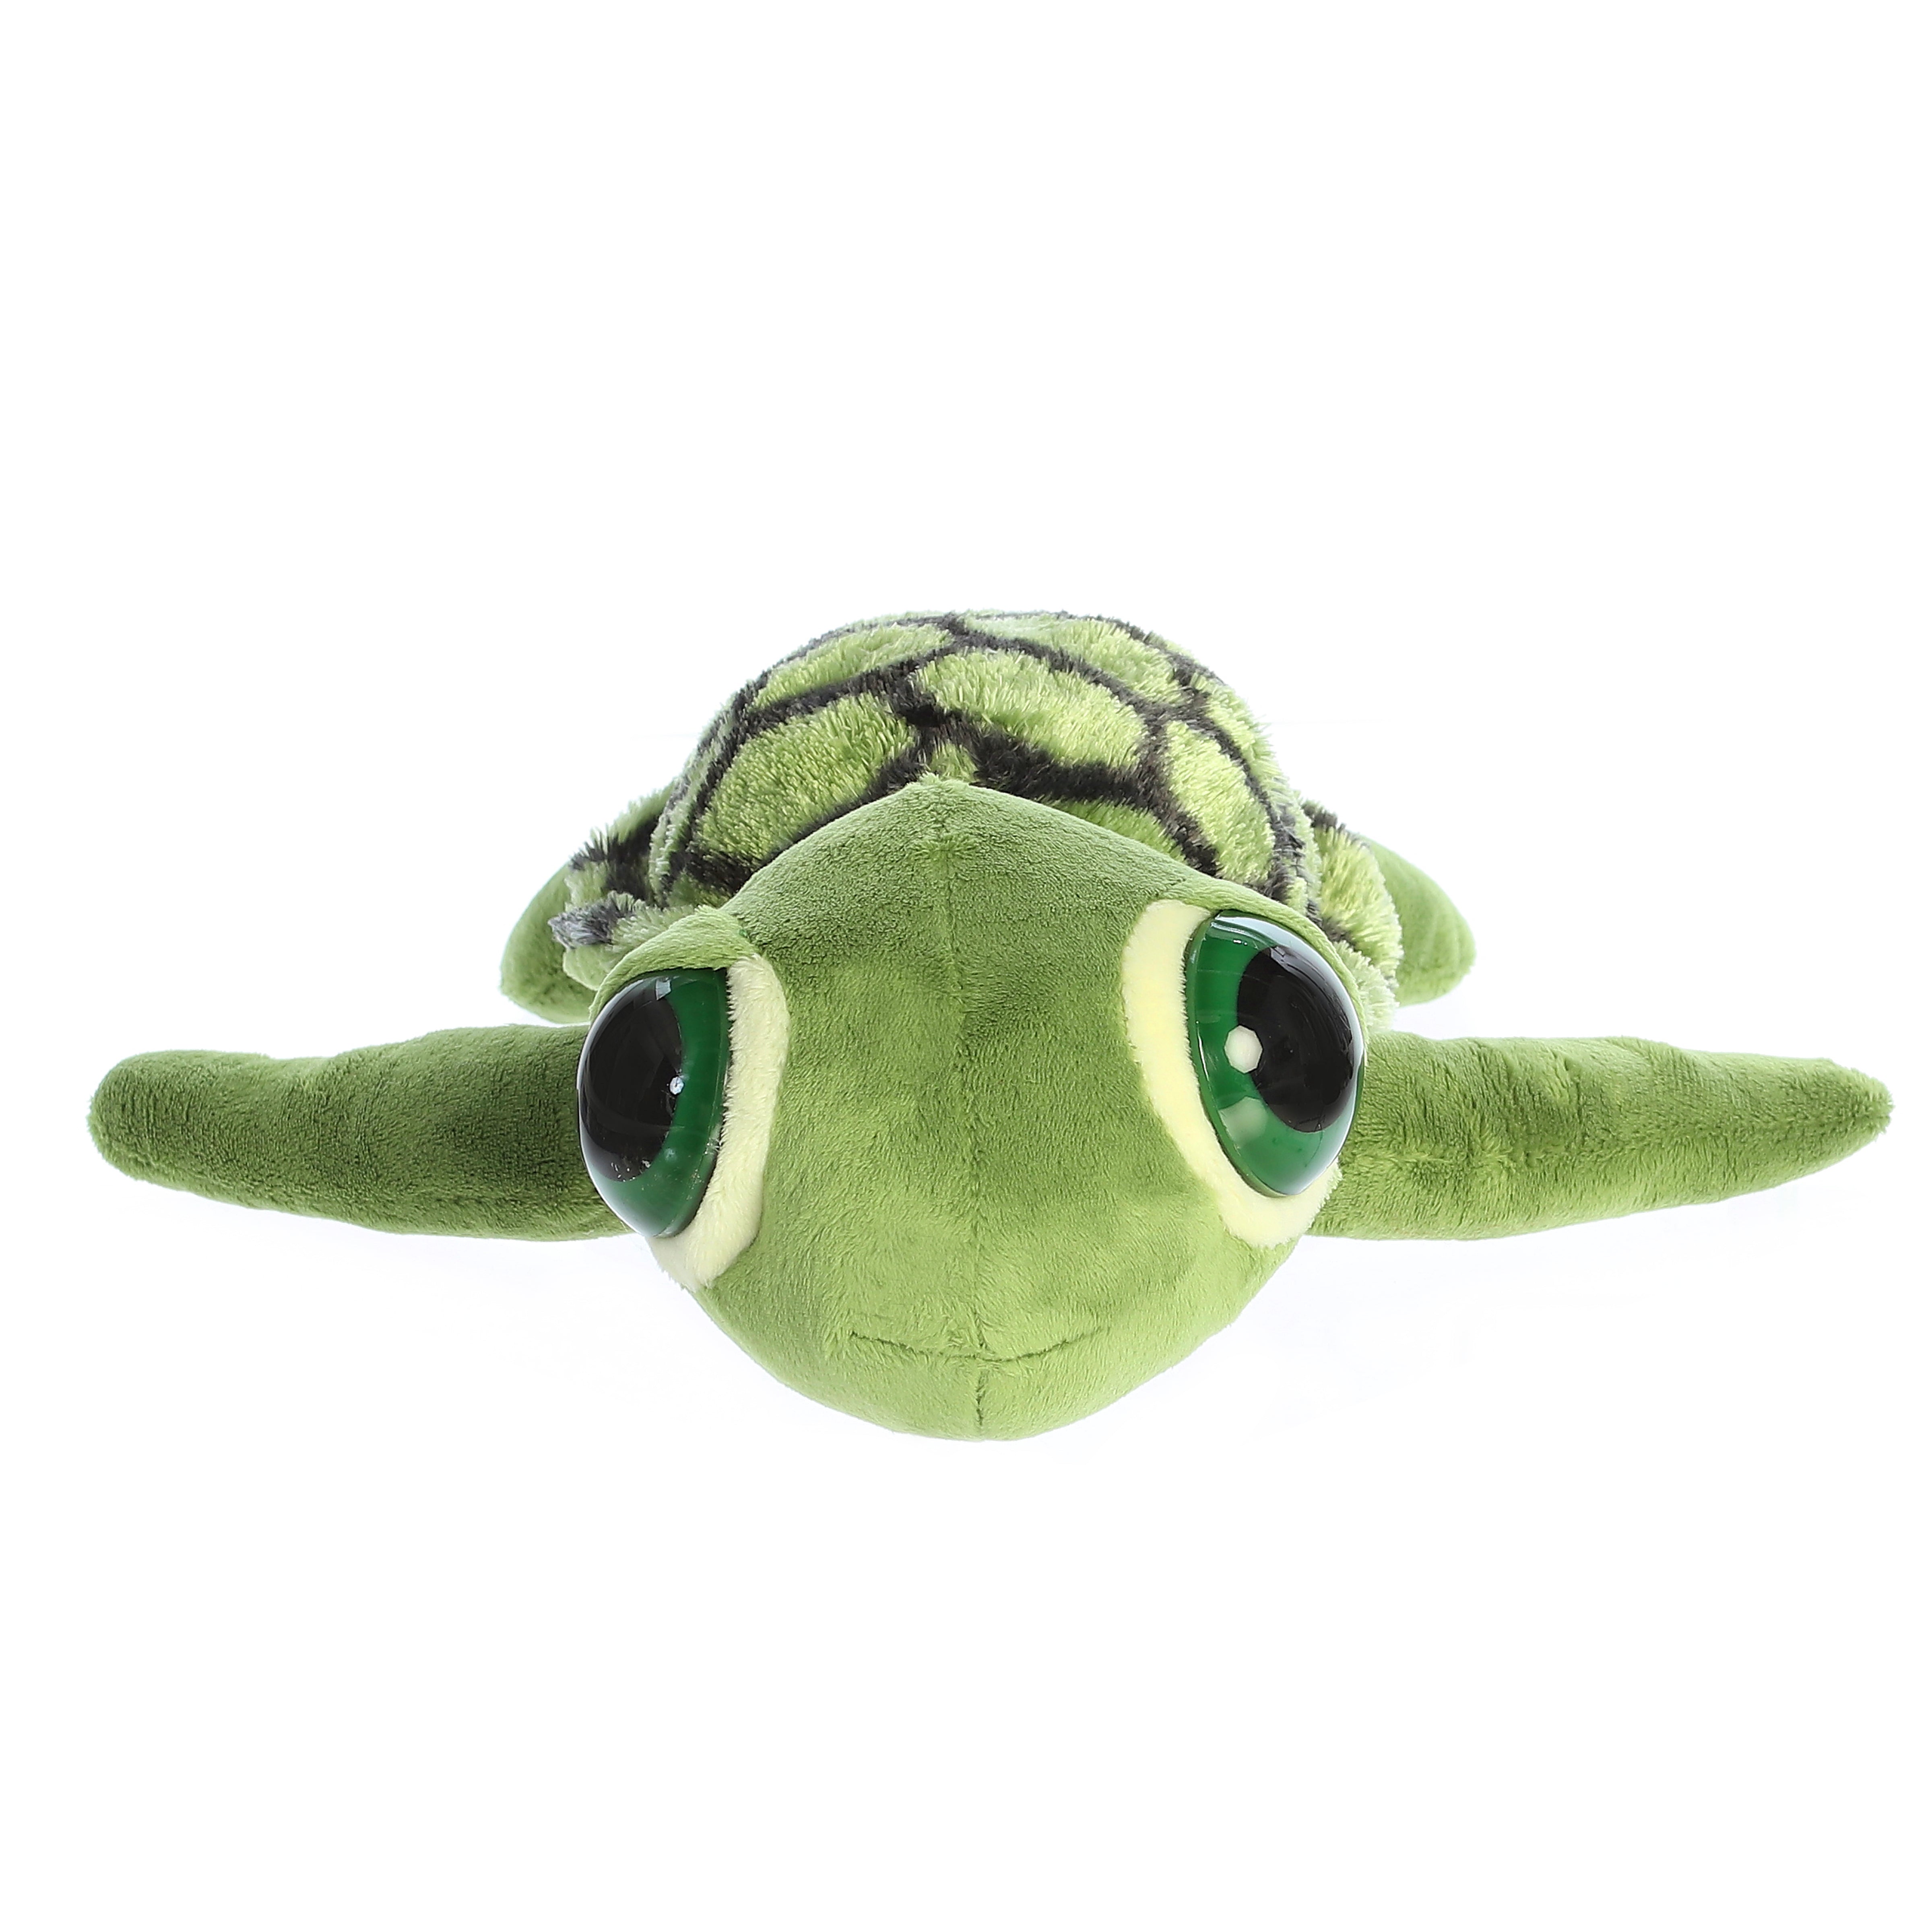 Aurora® - Dreamy Eyes™ - 10" Slide Sea Turtle